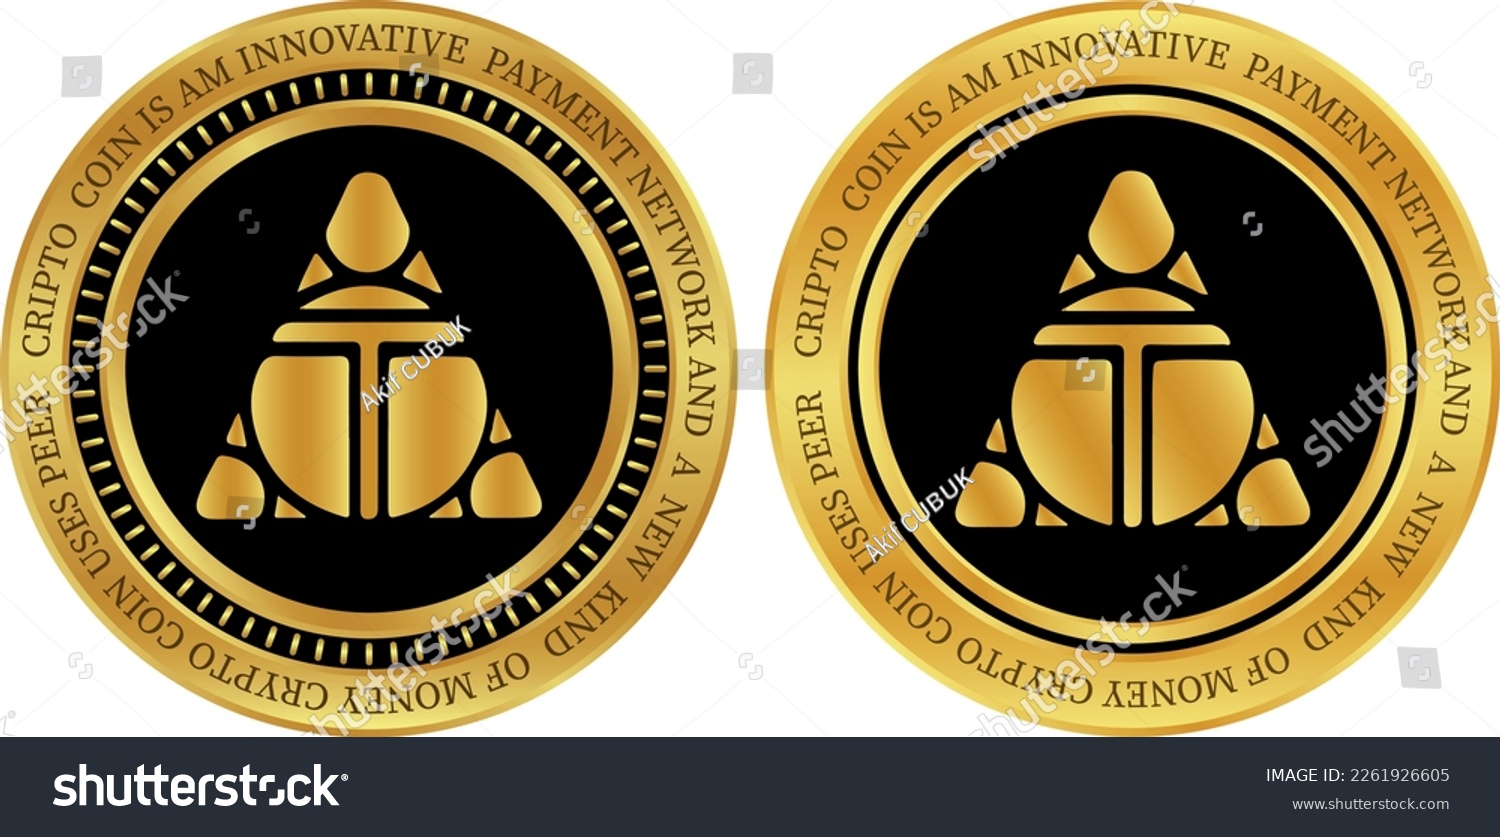 SVG of  alien worlds-tlm virtual currency logo. vector illustrations. 3d illustrations. svg